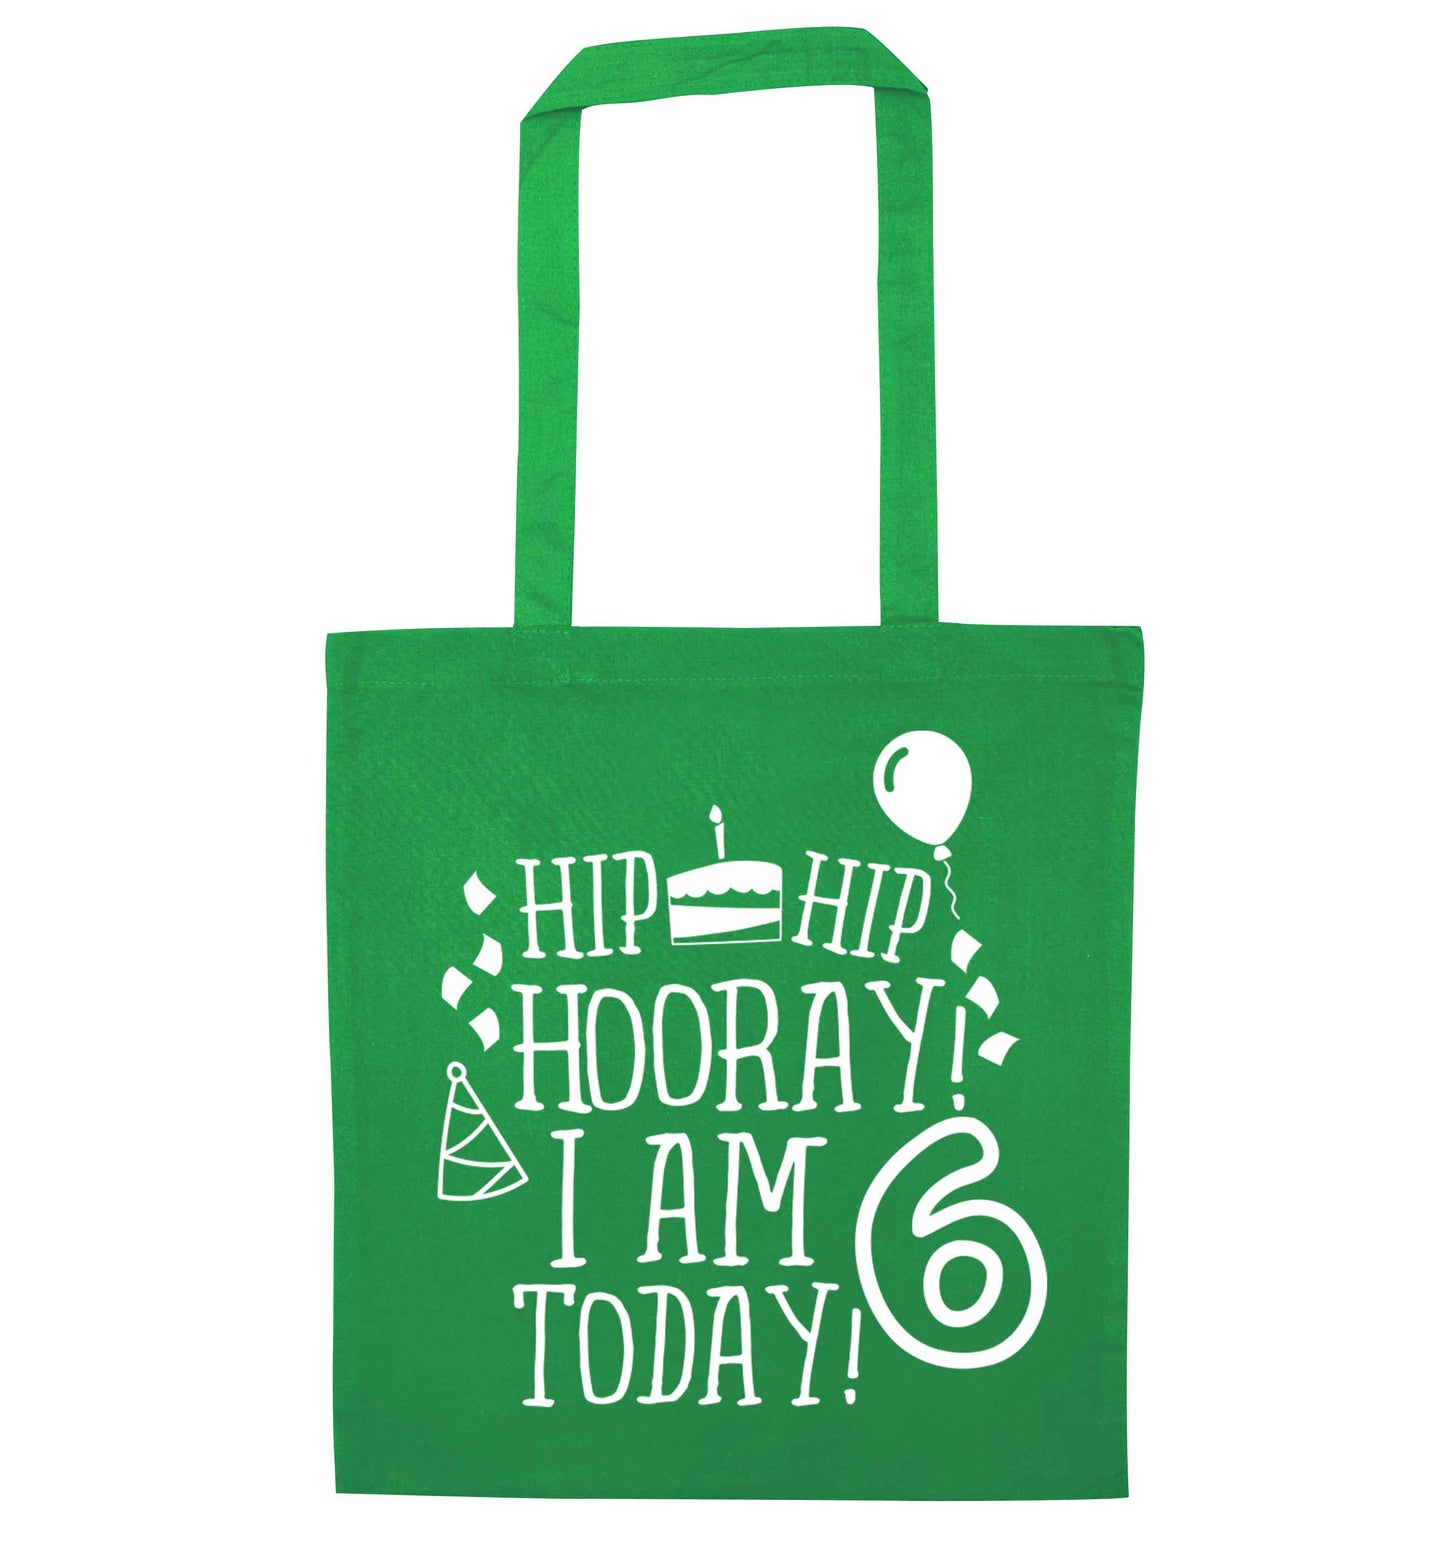 Hip hip hooray I am six today! green tote bag